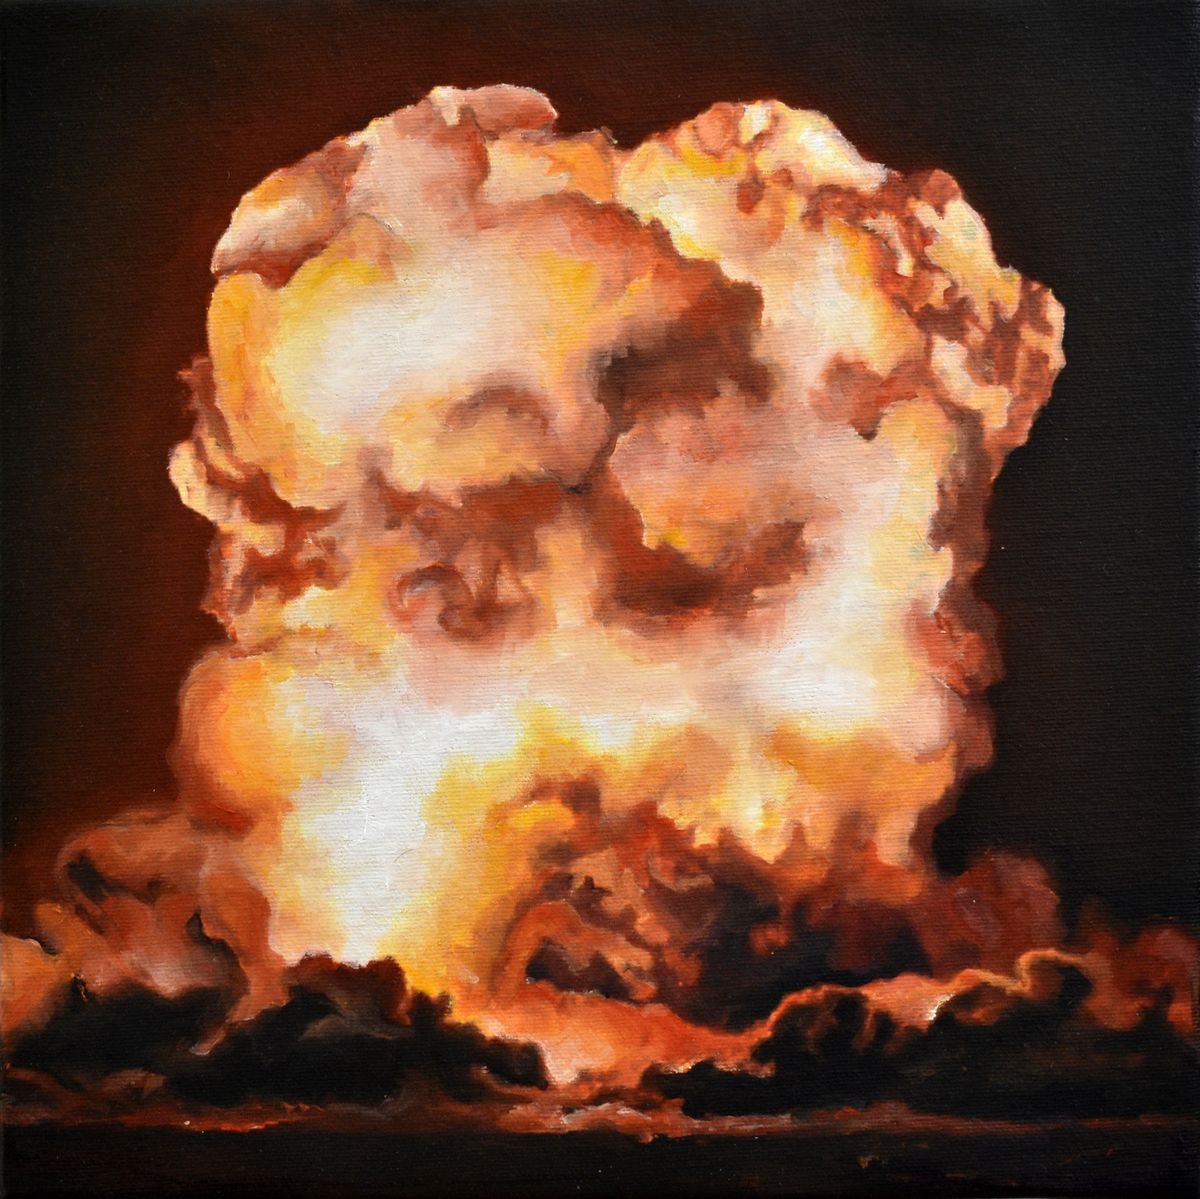 Nuclear test 3_ by Sasha